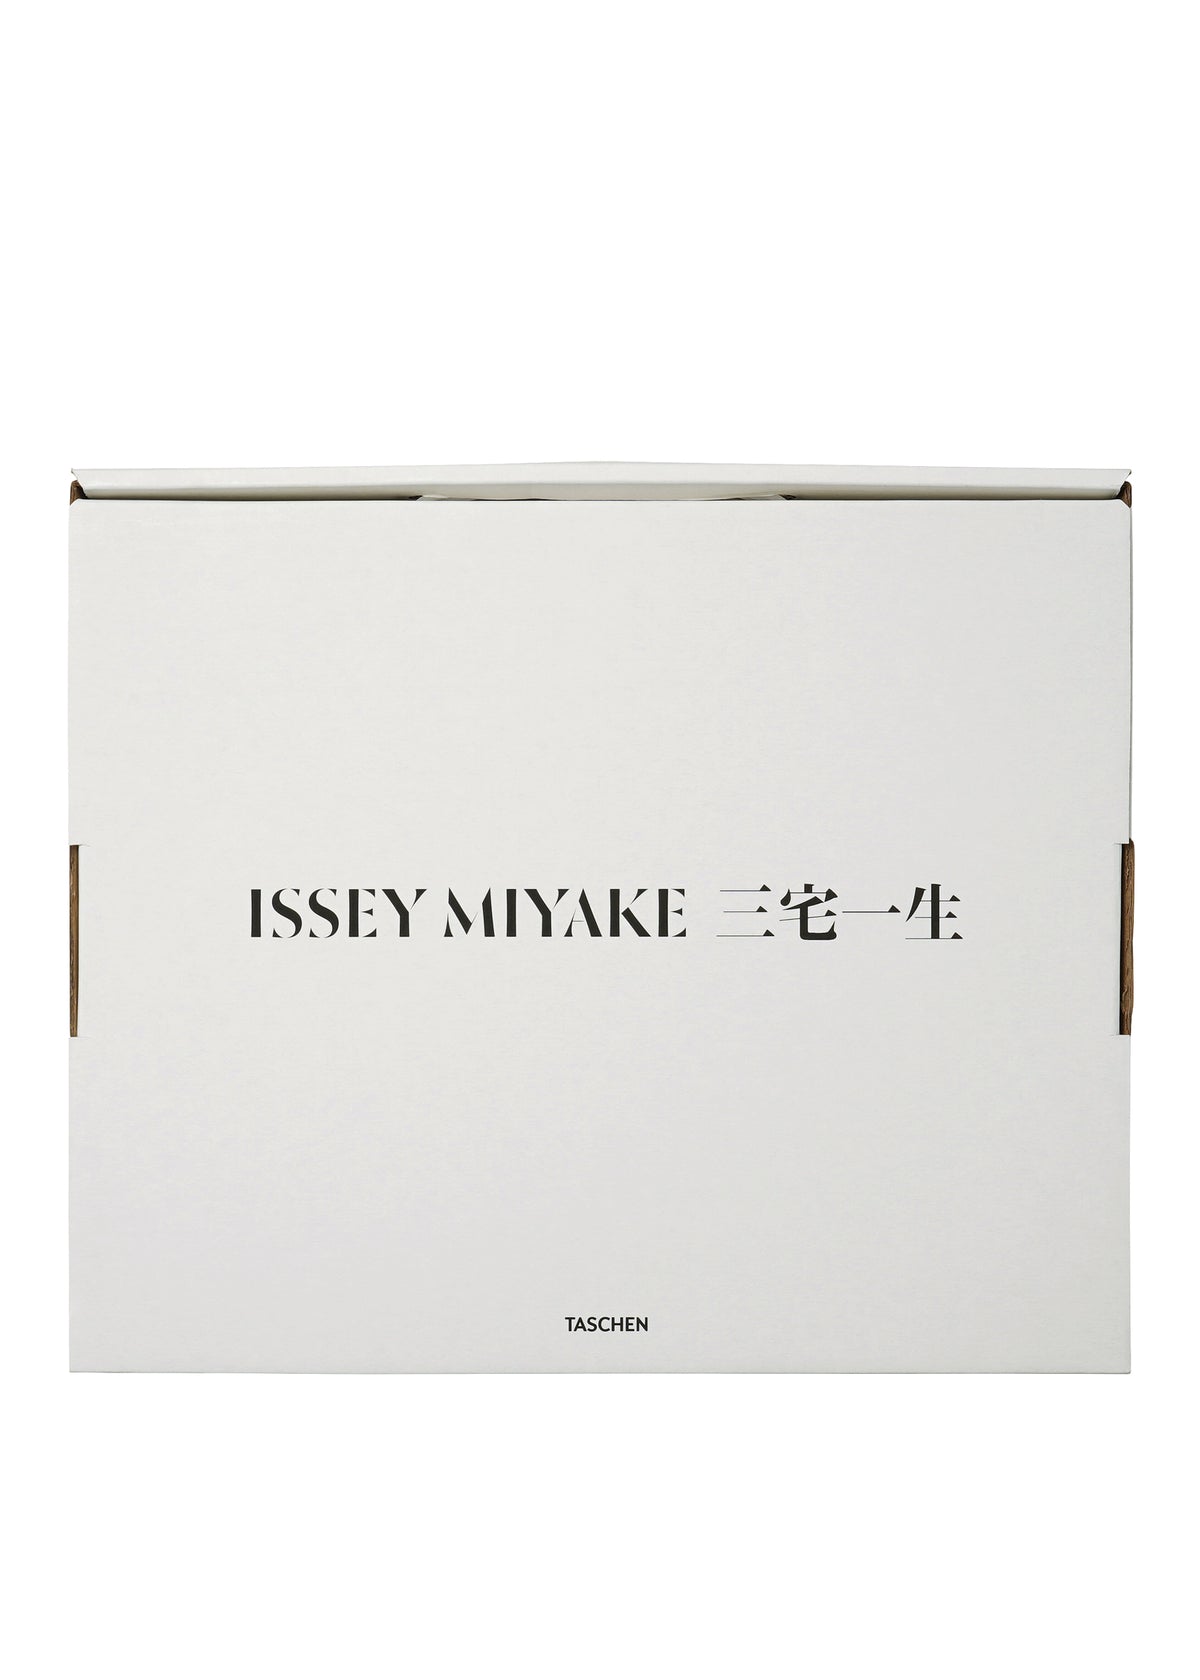 『ISSEY MIYAKE 三宅一生』増補改訂版（TASCHEN）、書籍ディテール画像11